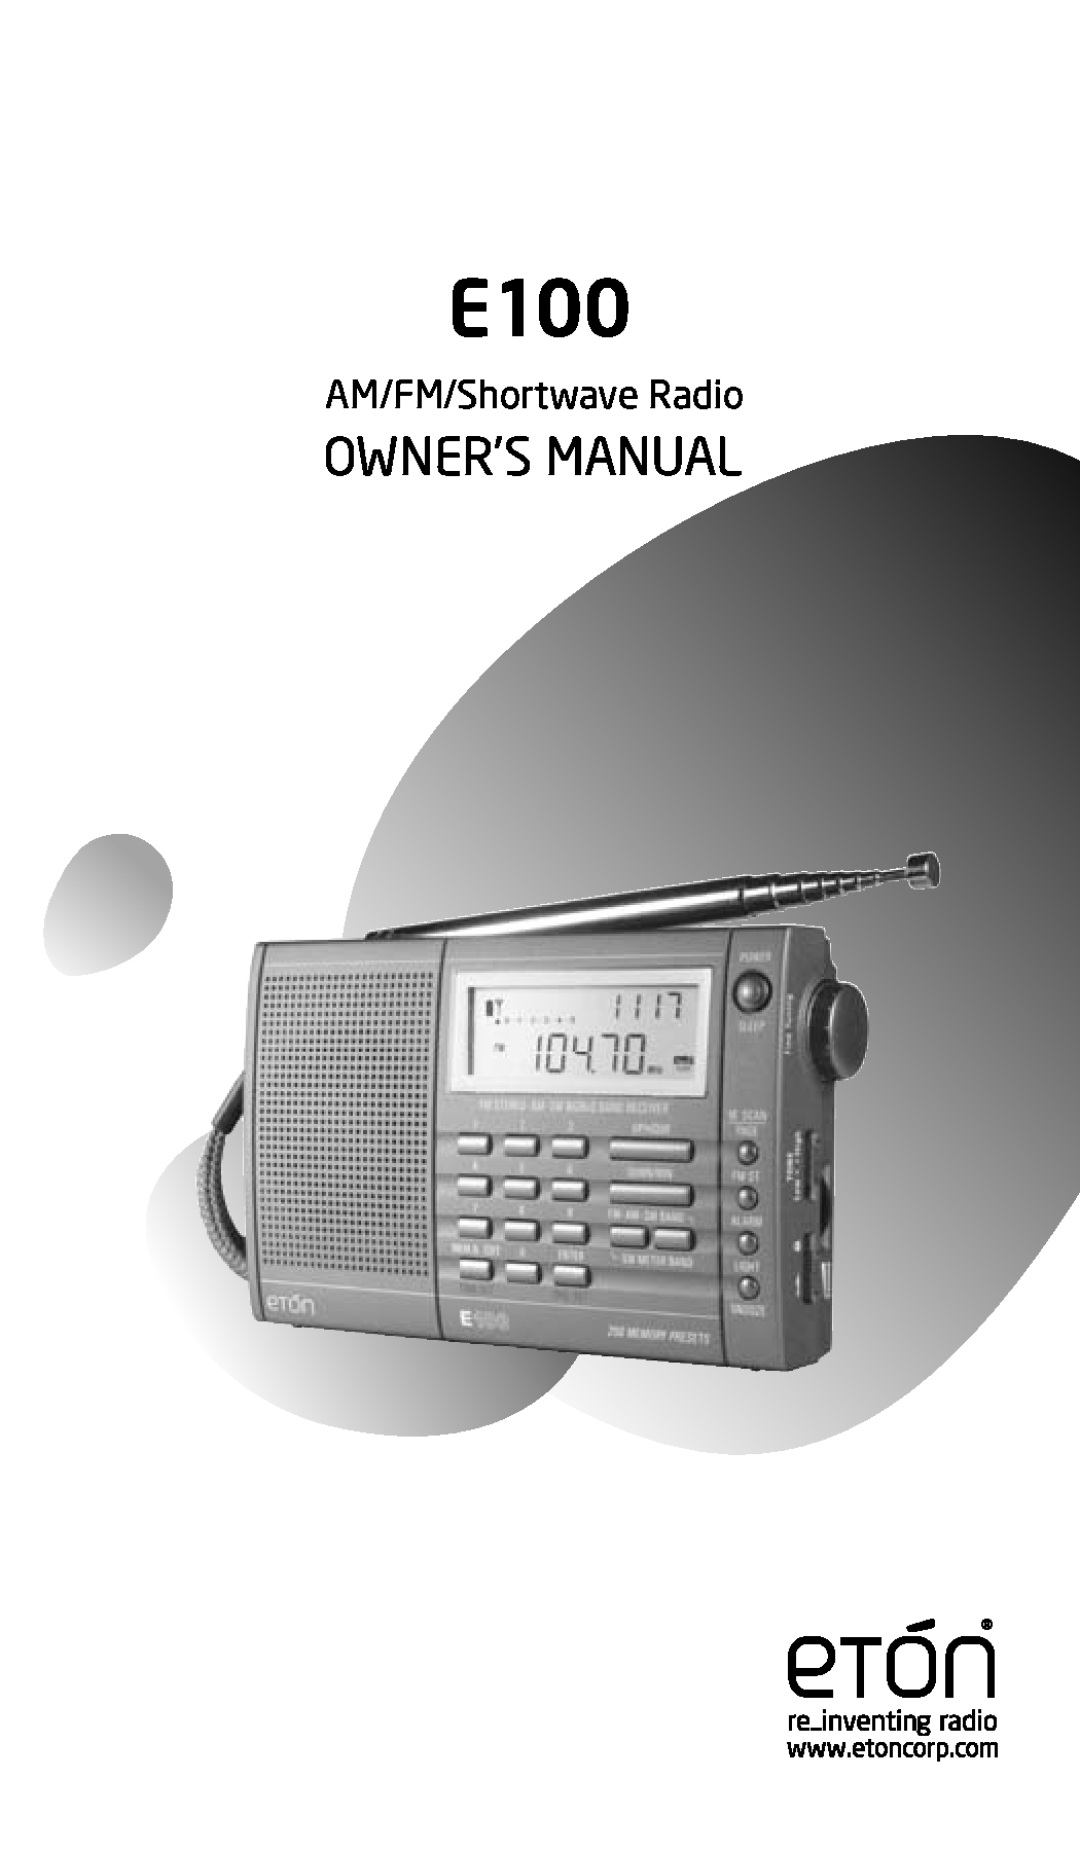 Eton E100 operation manual Op Er Ation M Anual, w ww .e toncor p .co m, Am/ F M/ Sho Rtwa Ve Radio 